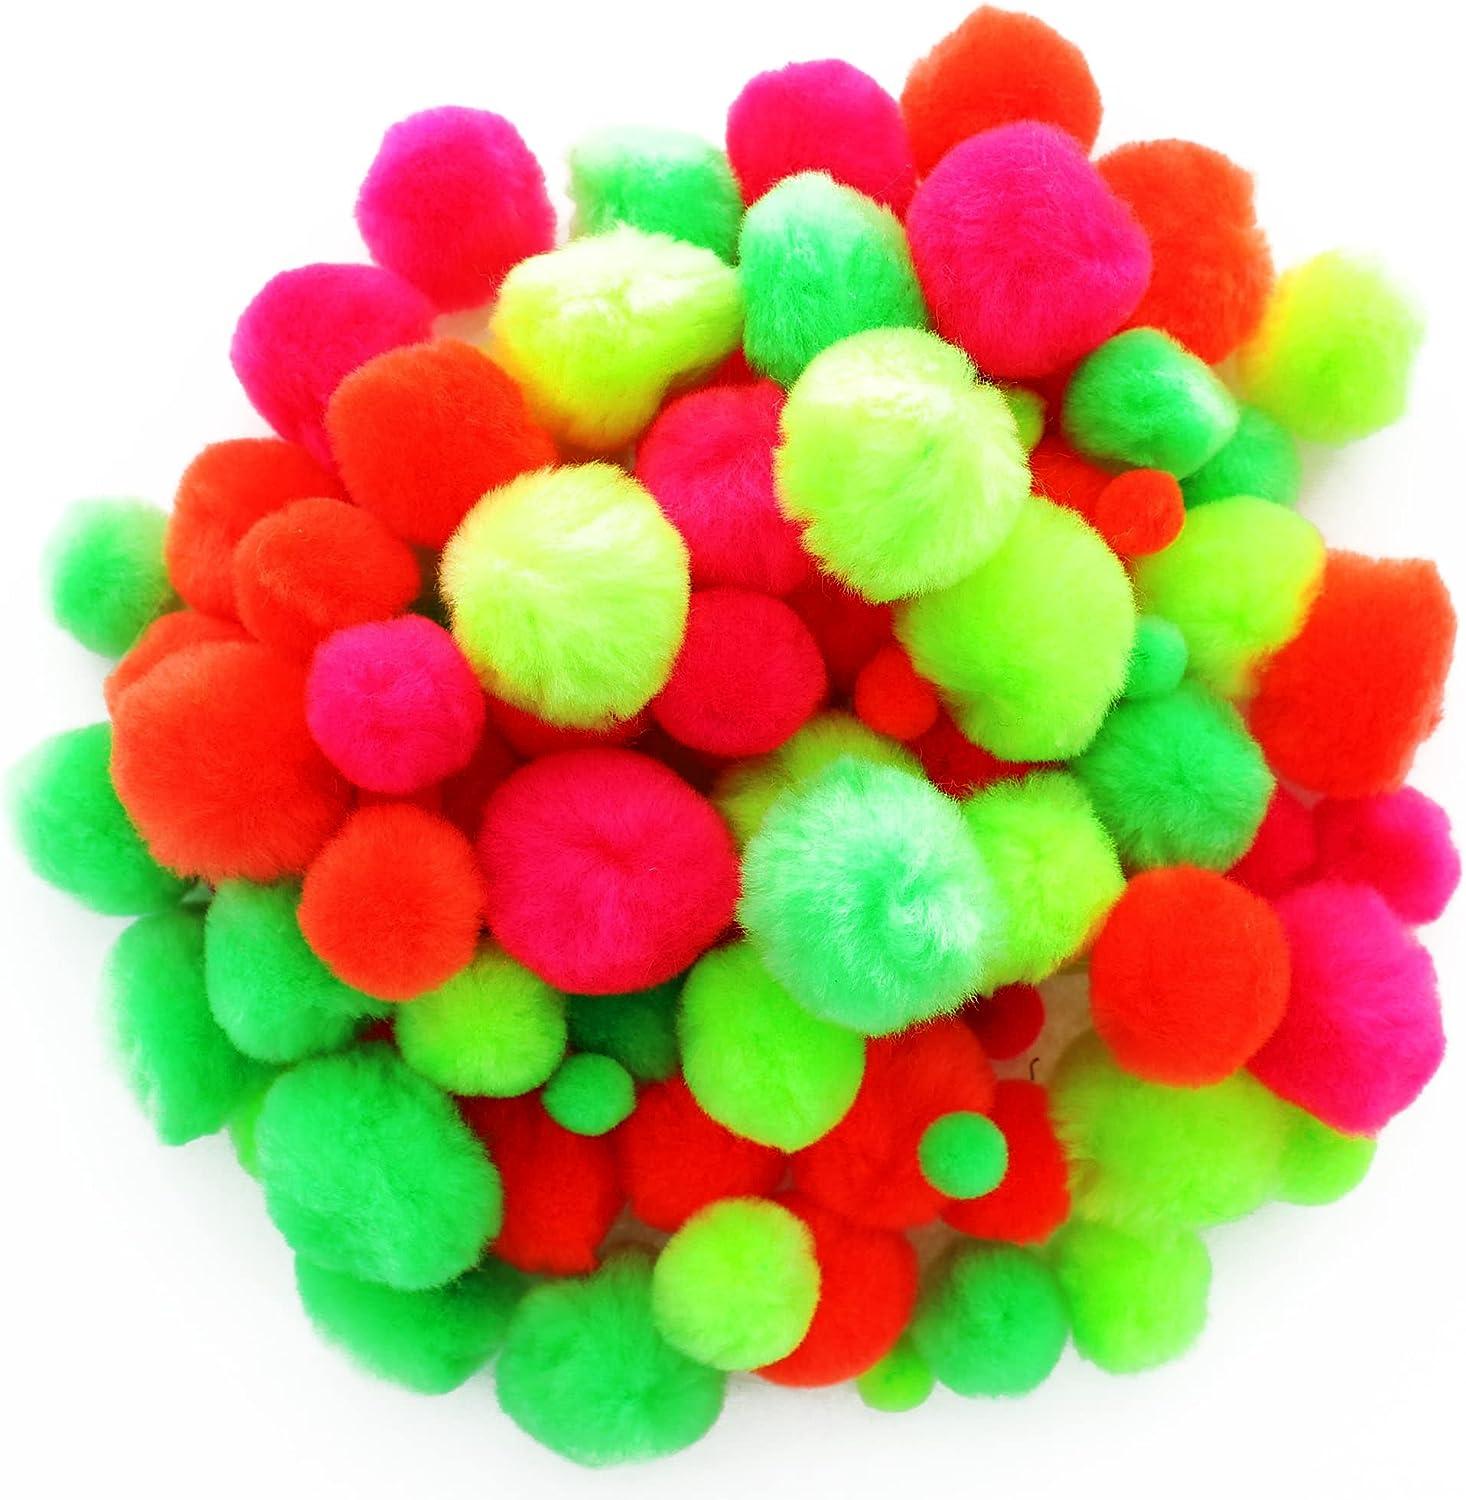 Essentials by Leisure Arts Pom Poms - Red - 1.5 - 15 piece pom poms arts  and crafts - colored pompoms for crafts - craft pom poms - puff balls for